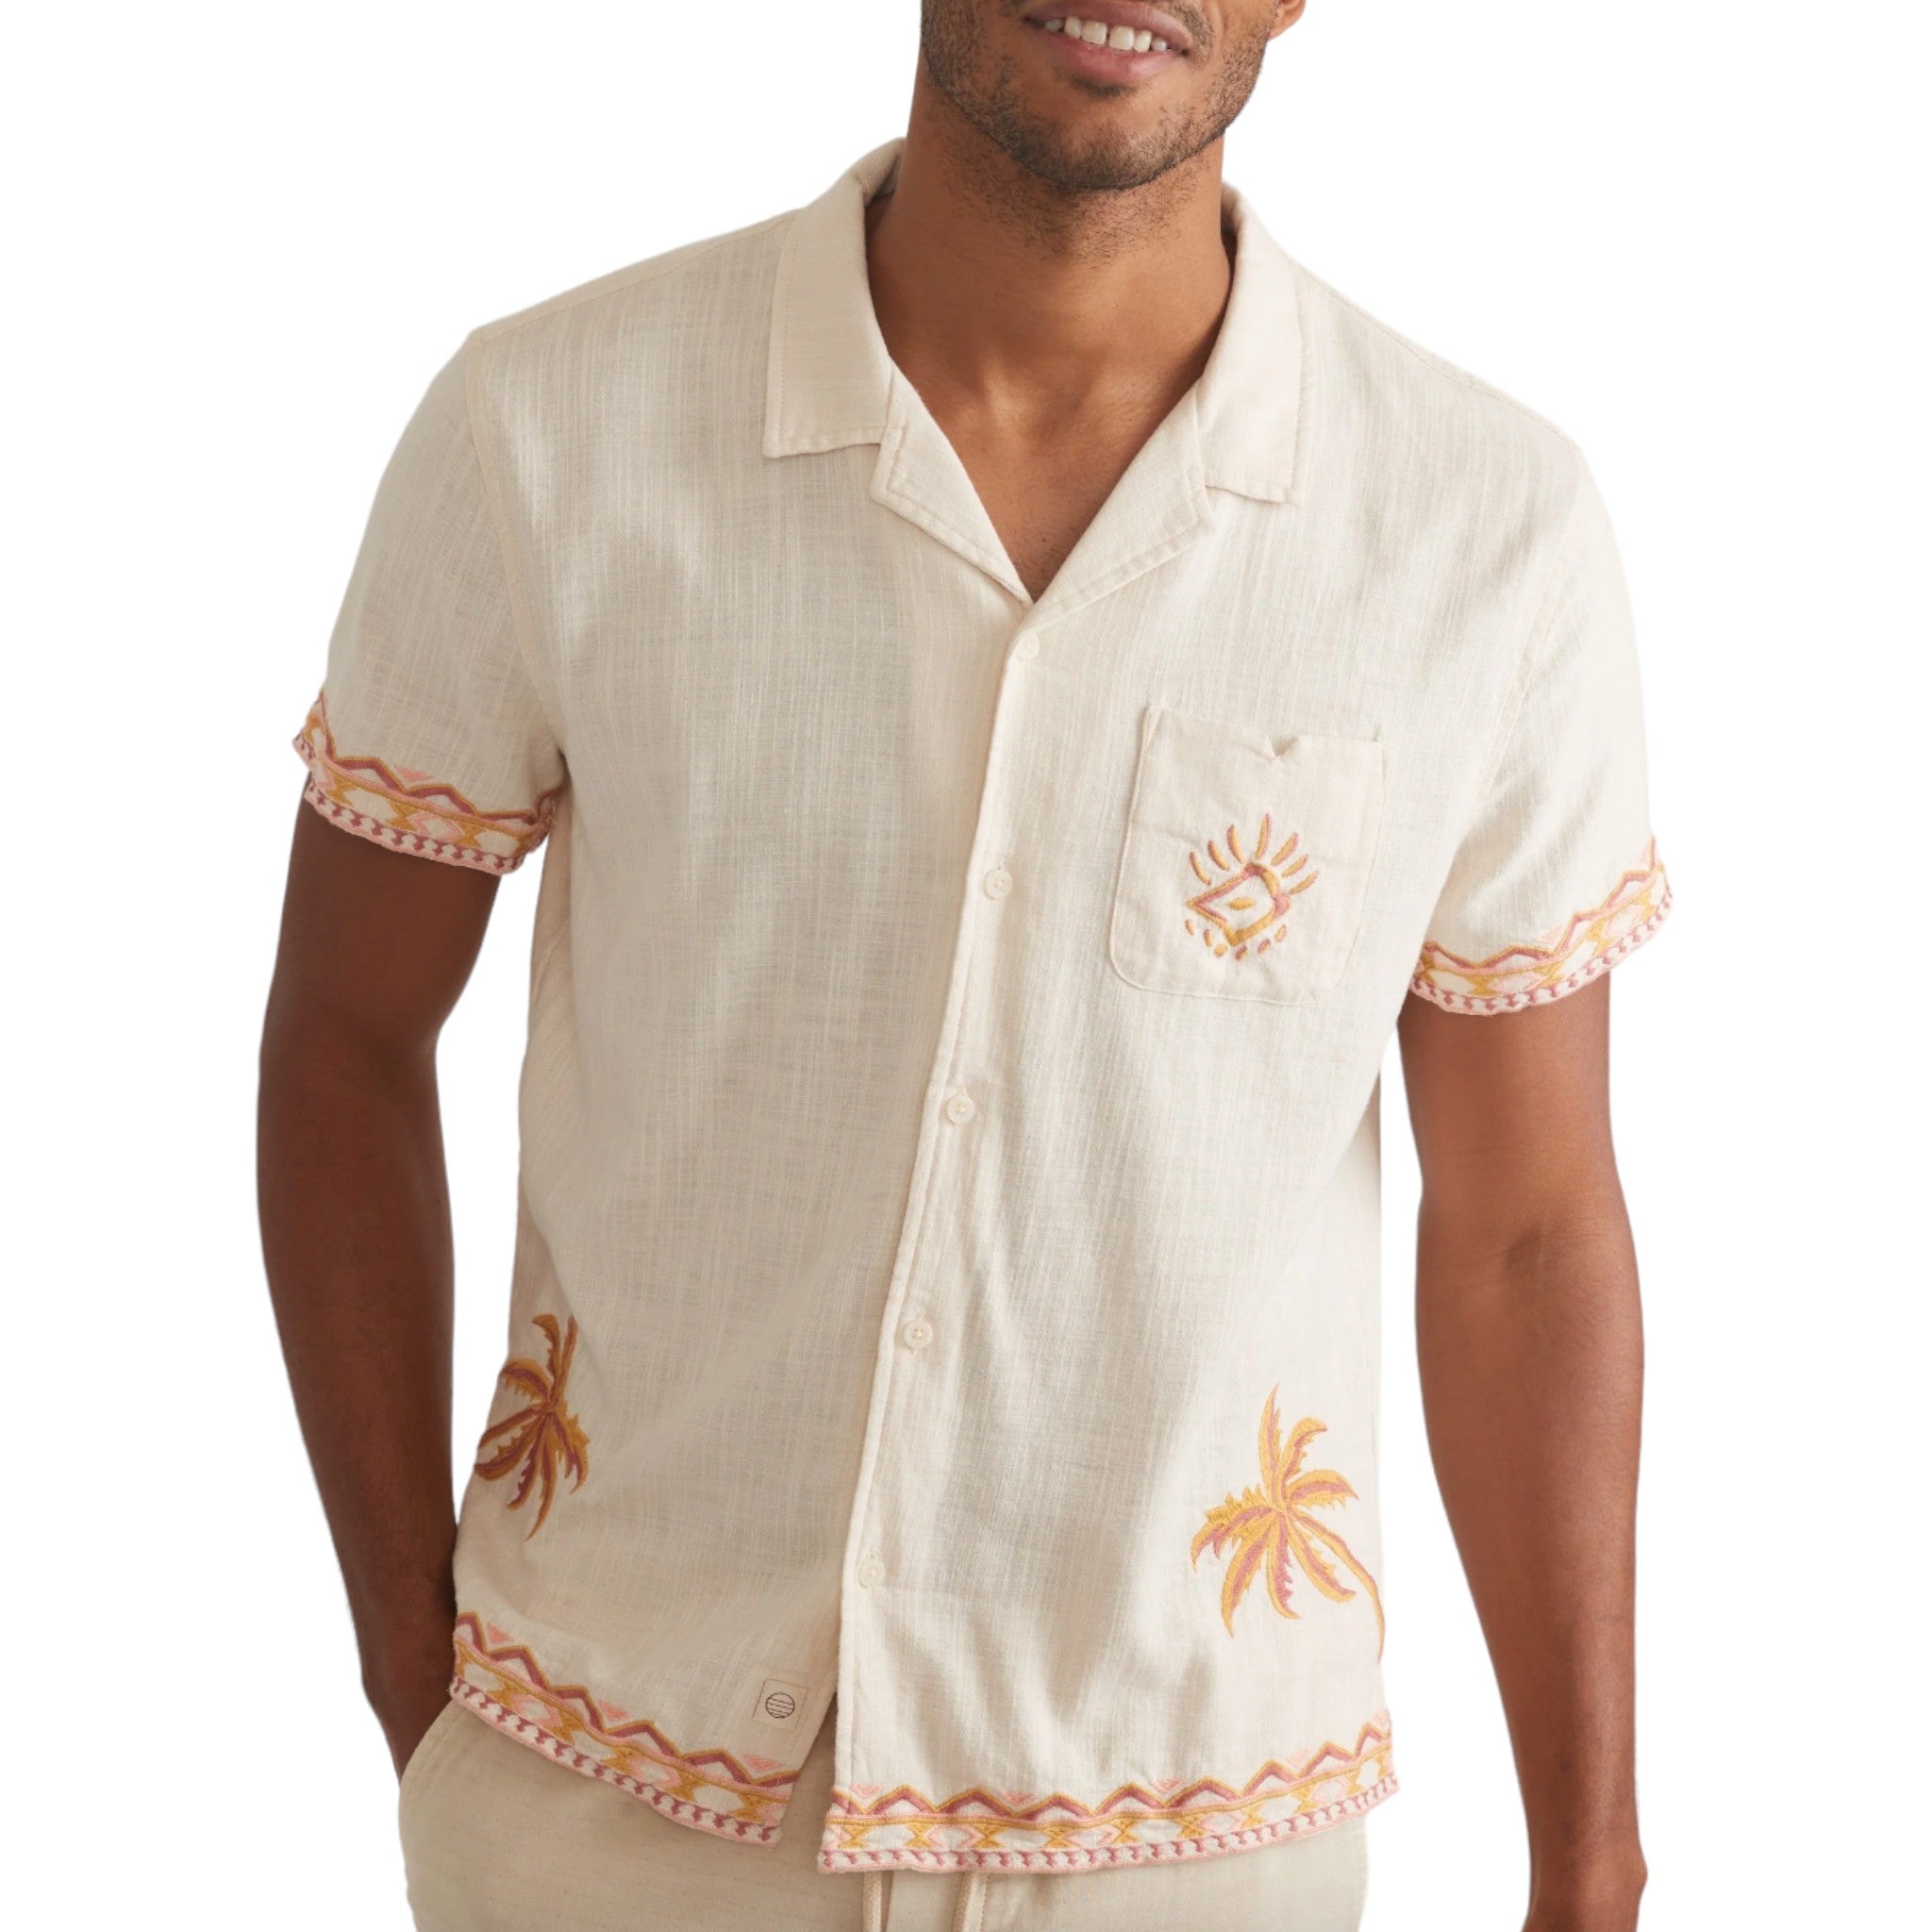 Marine Layer - Embroidered Resort Shirt - Natural / Coral